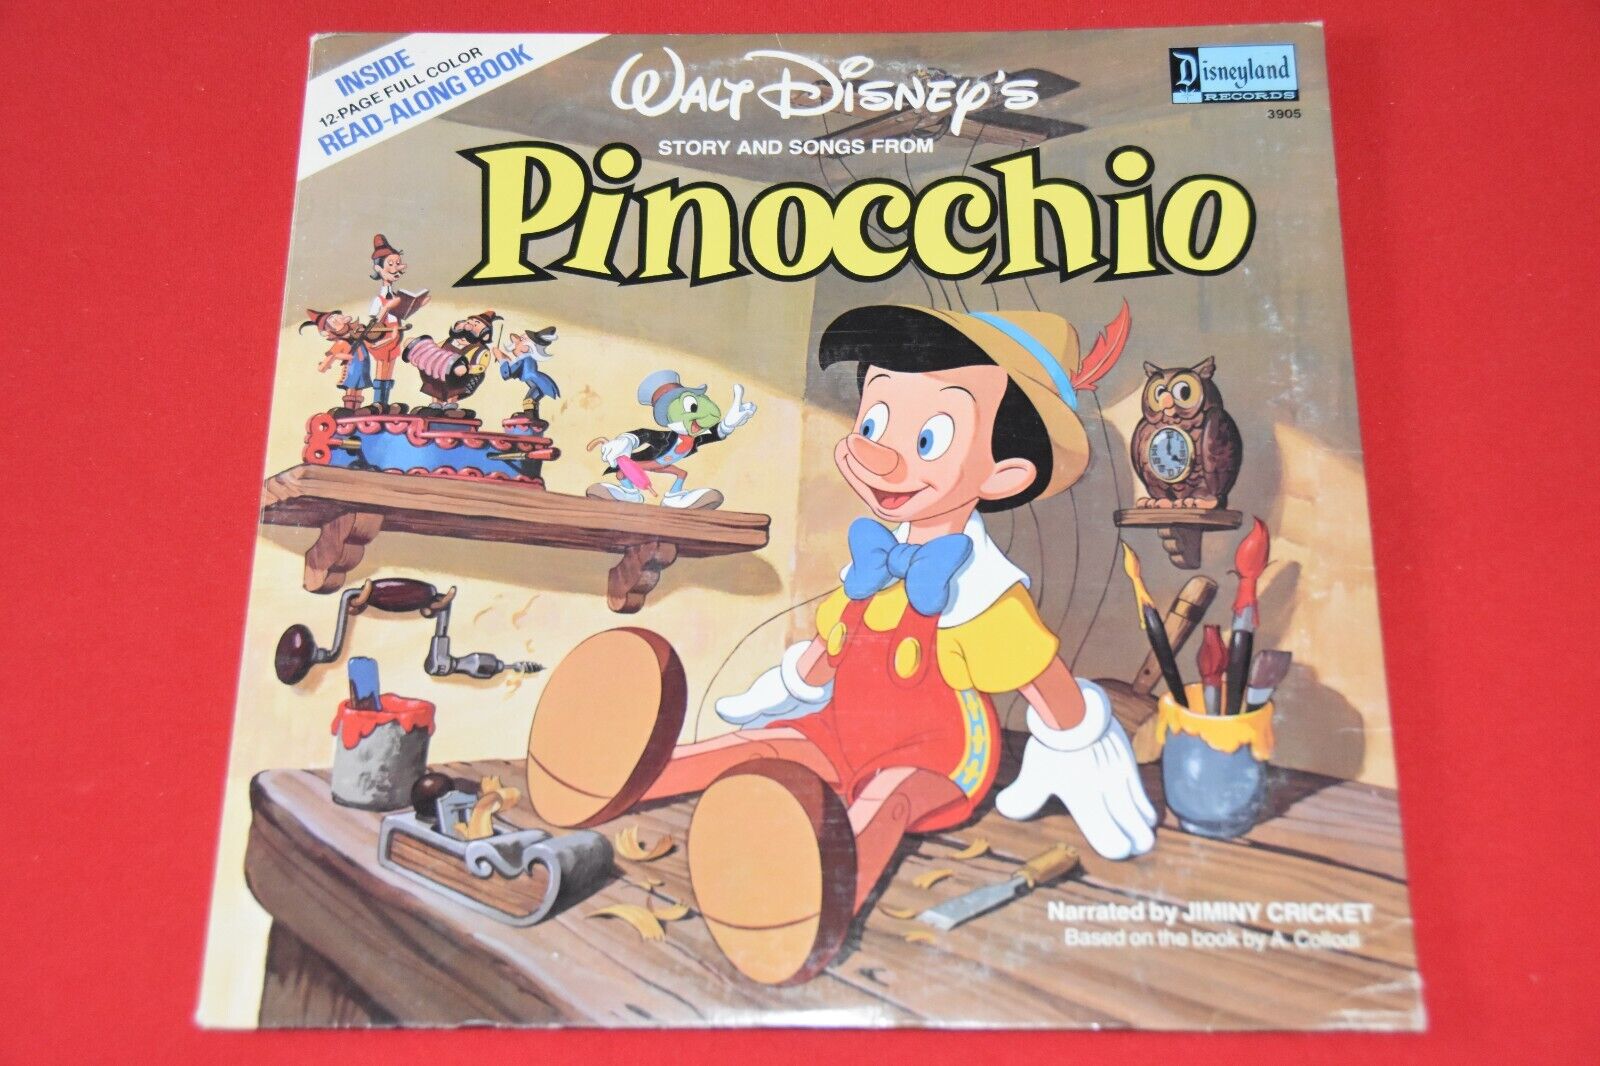 vintage PINOCCHIO Soundtrack vinyl LP record book Disneyland 3905 Walt Disney